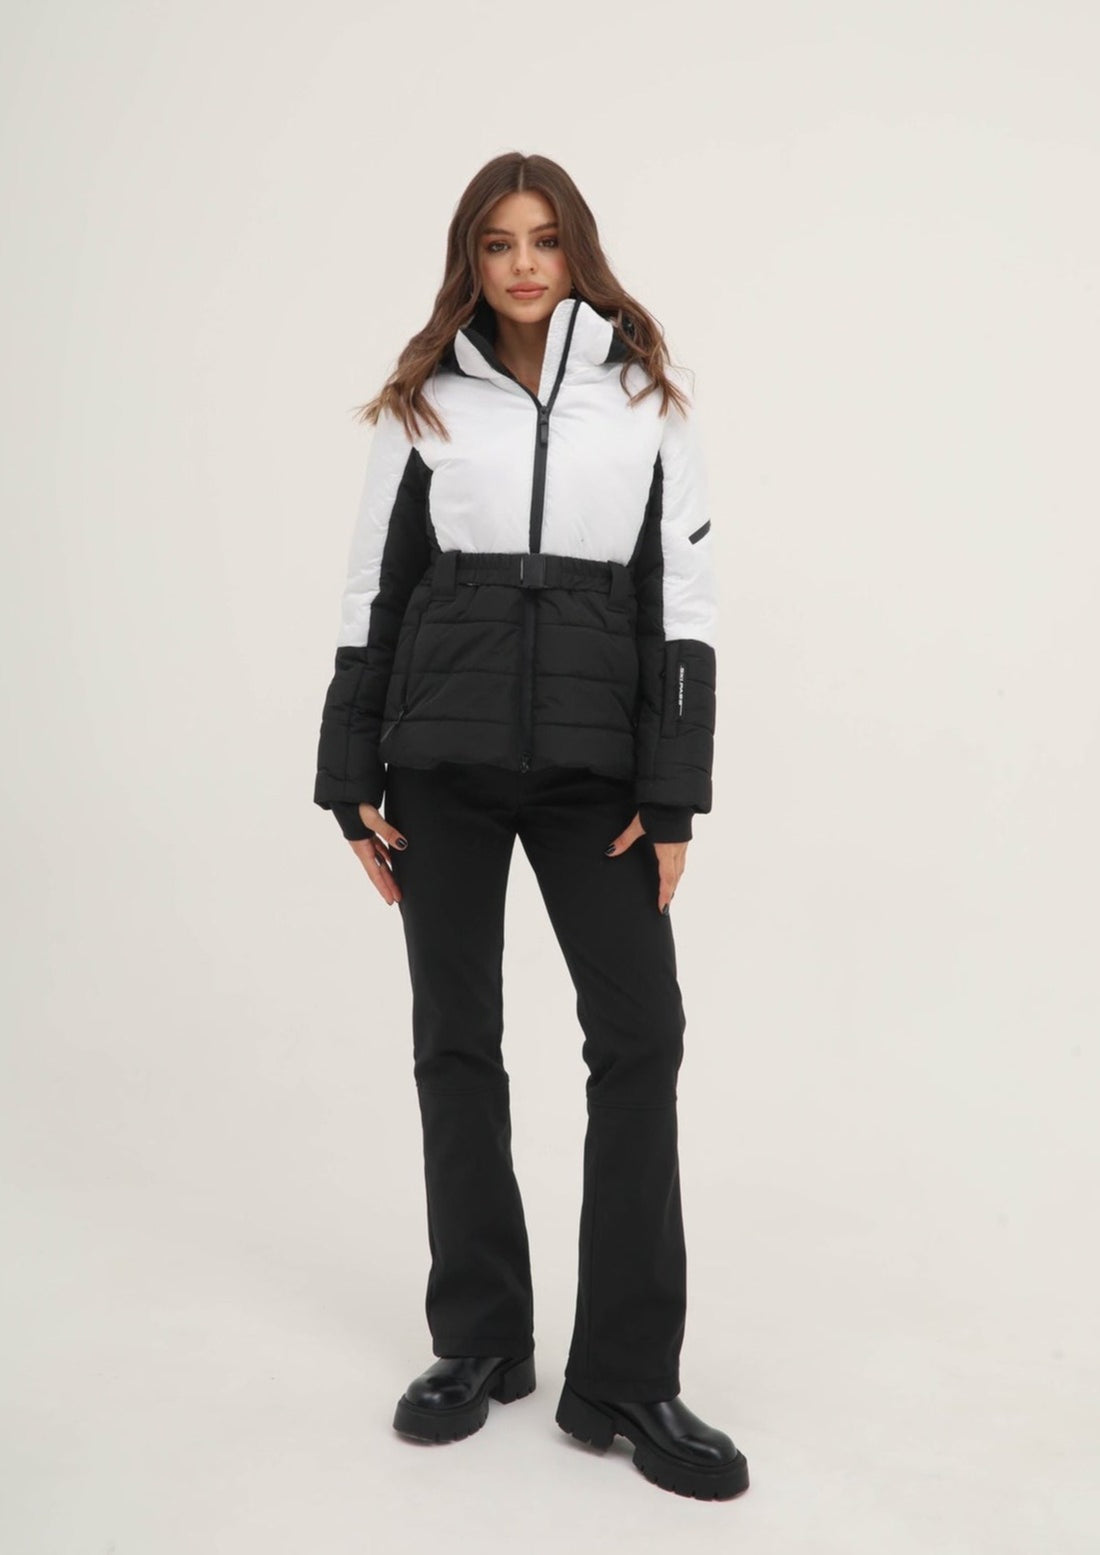 Black two piece ski outfit - Monte Rosa Black - Black ski suit